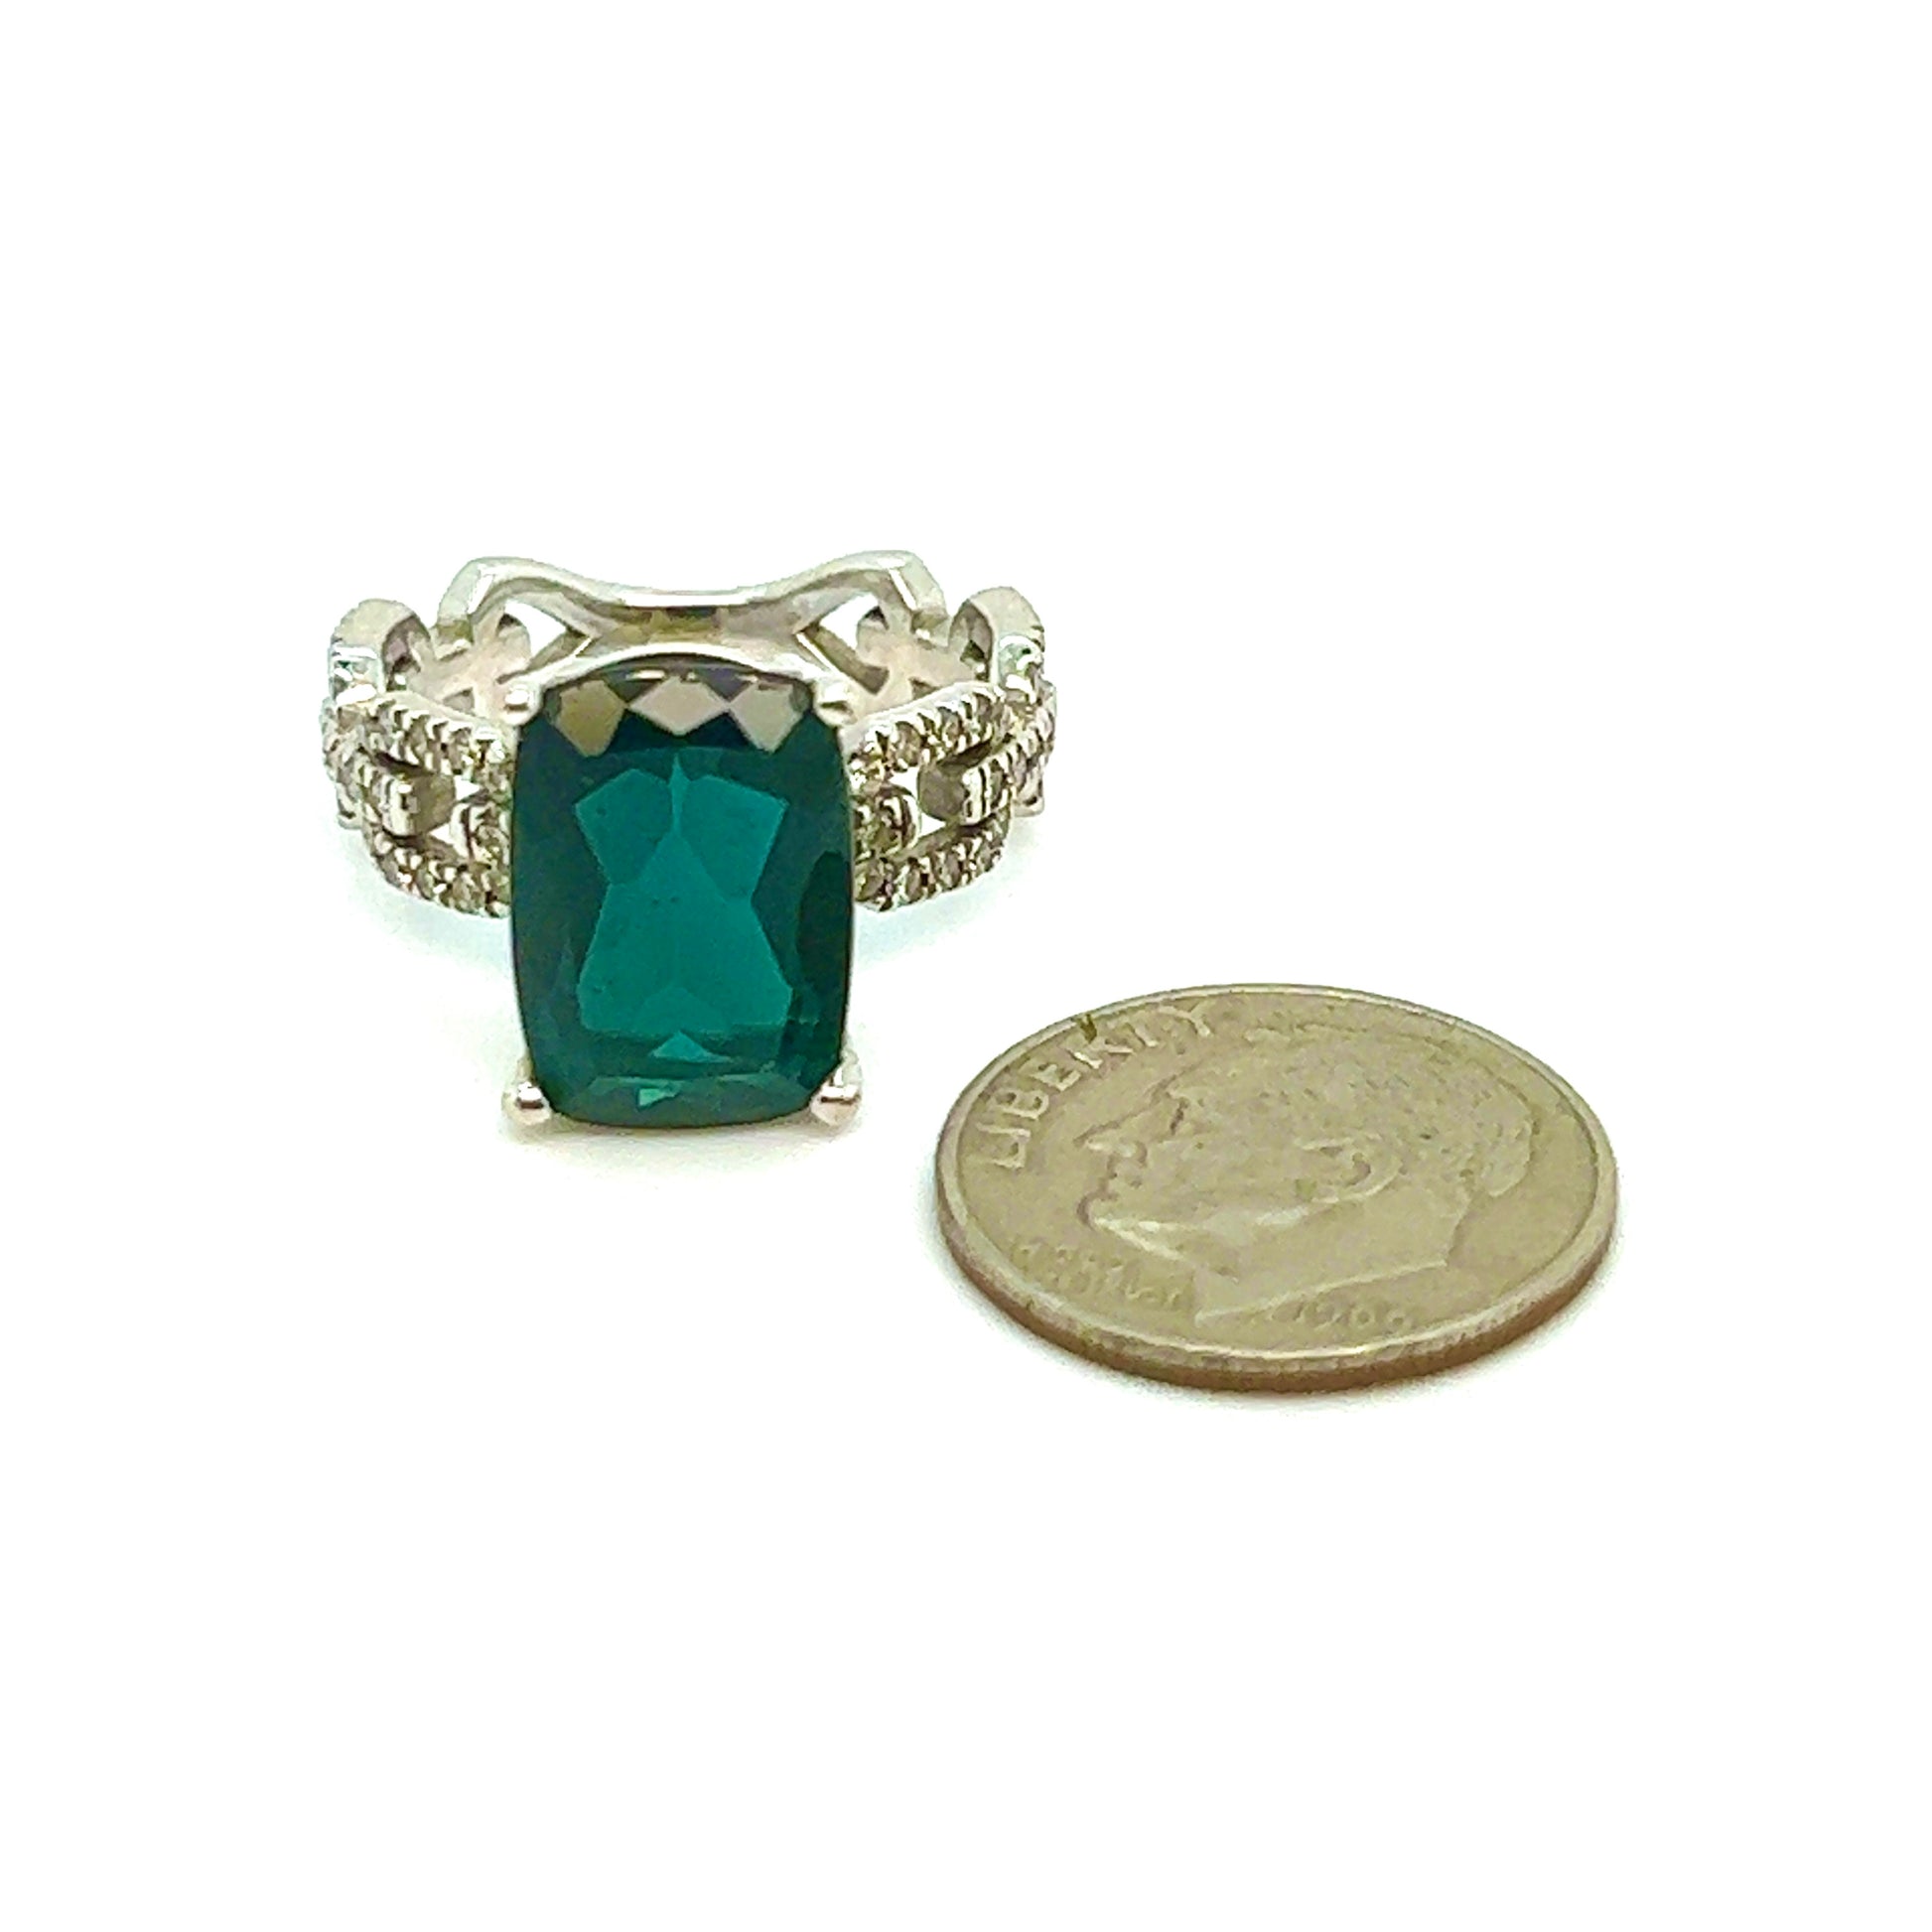 Natural Tourmaline Diamond Ring 6 14k W Gold 5 TCW Certified $4,250 304176 - Certified Fine Jewelry